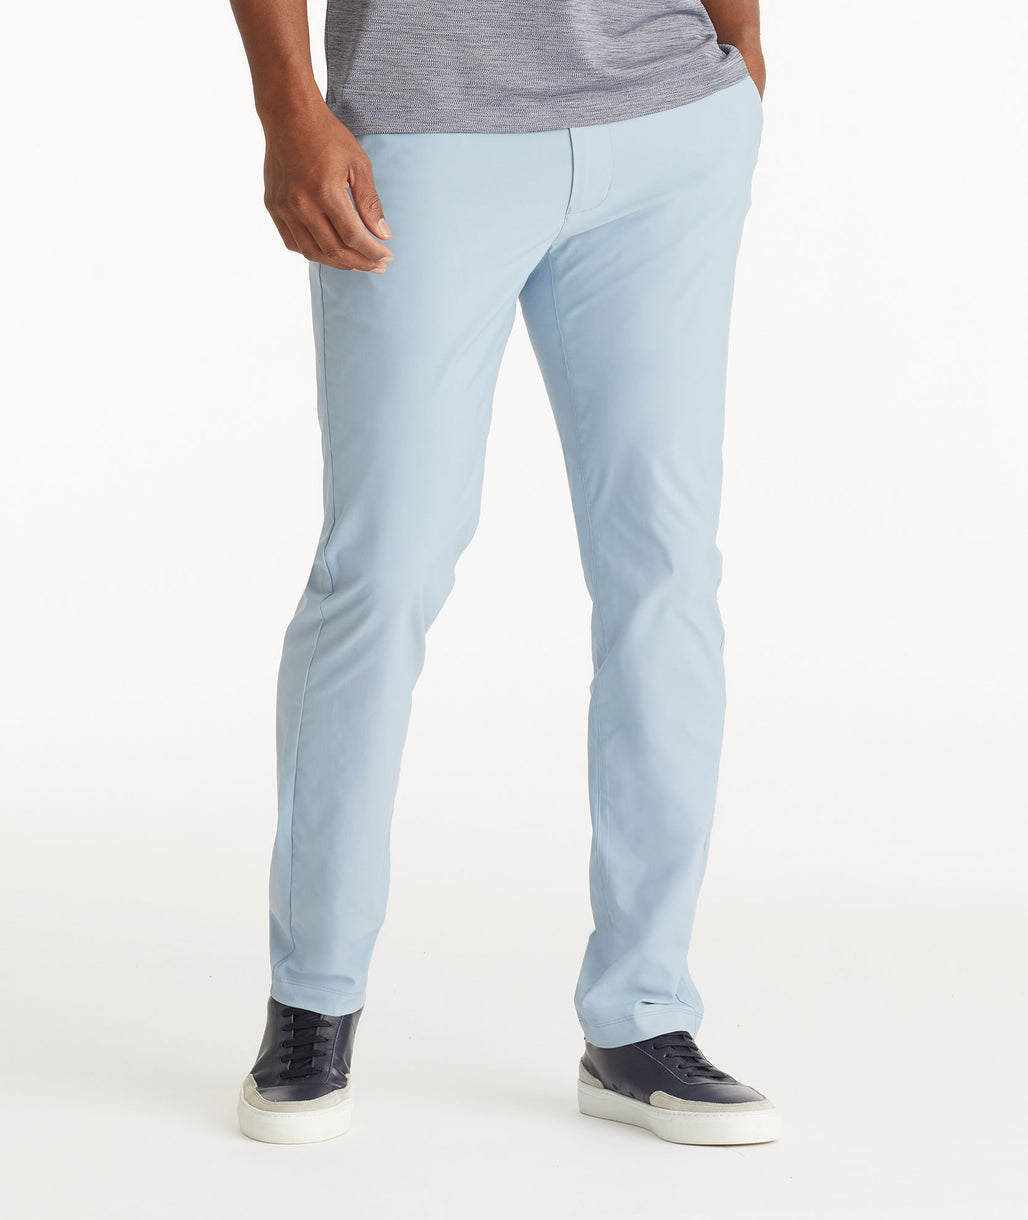 Model wearing UNTUCKit Blue Traveler Pants